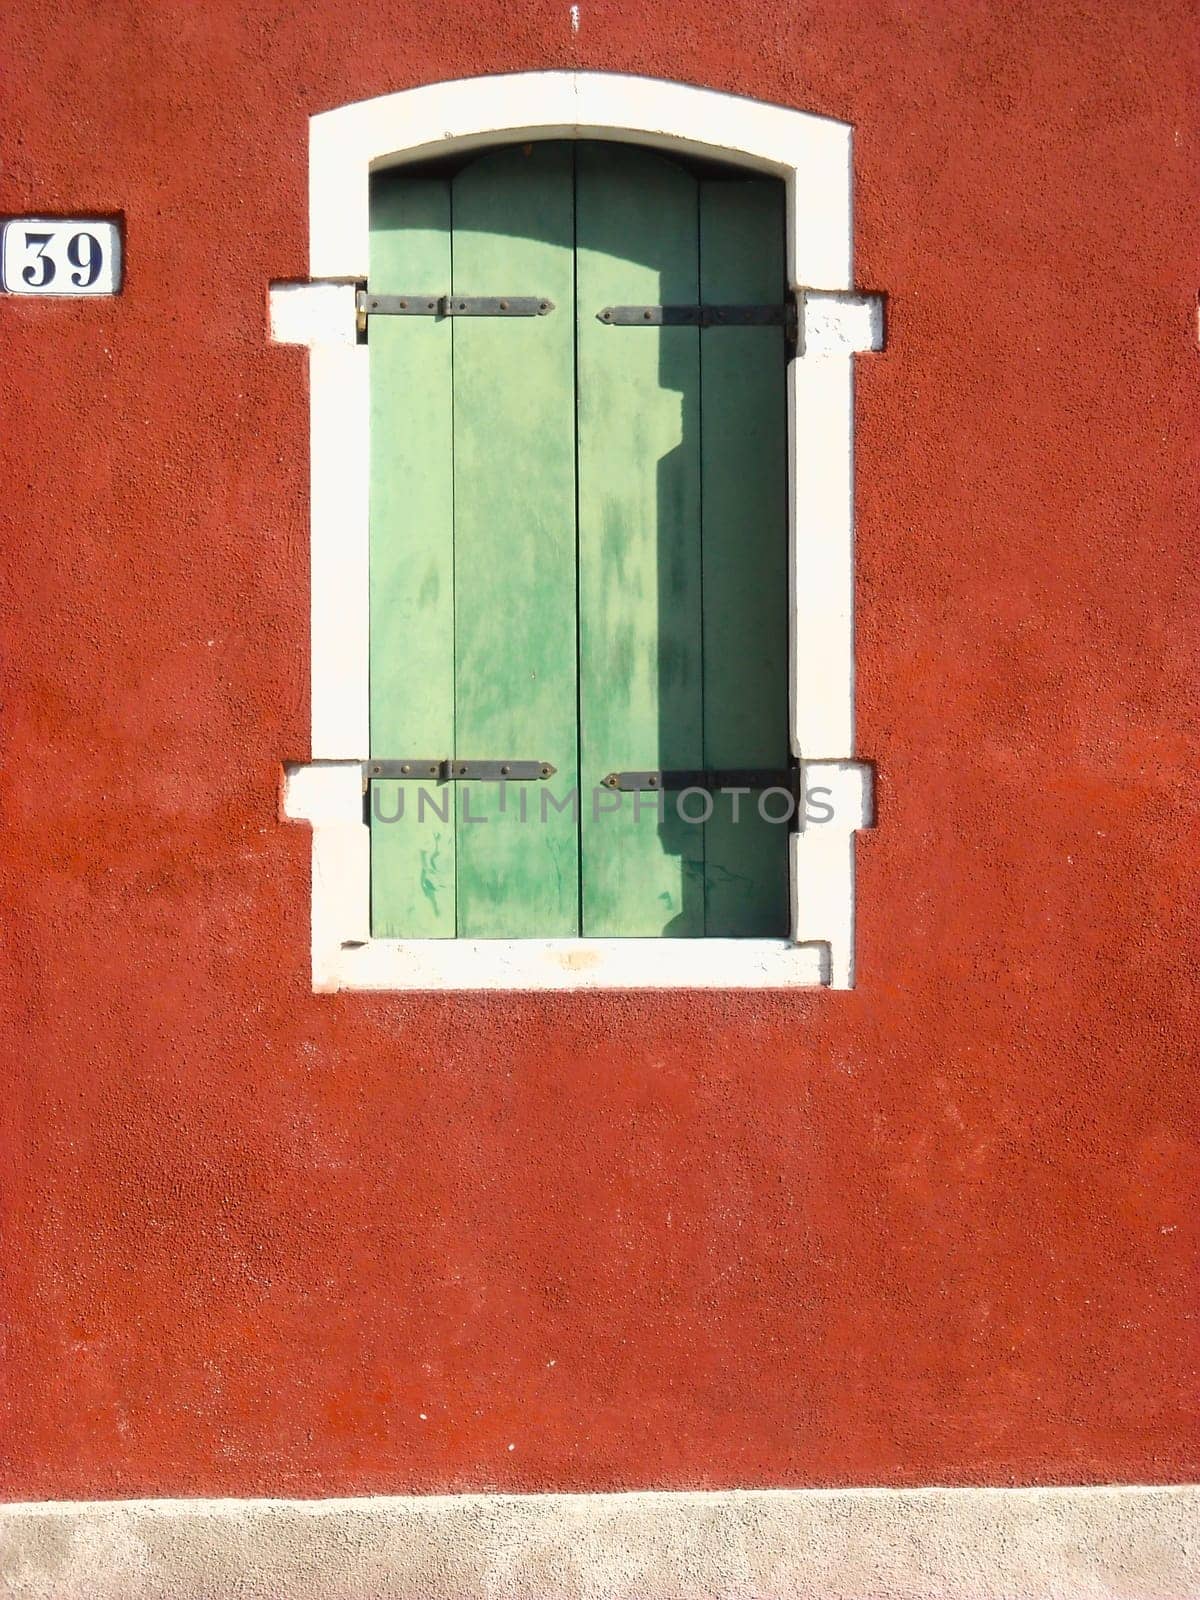 Window by Giamplume